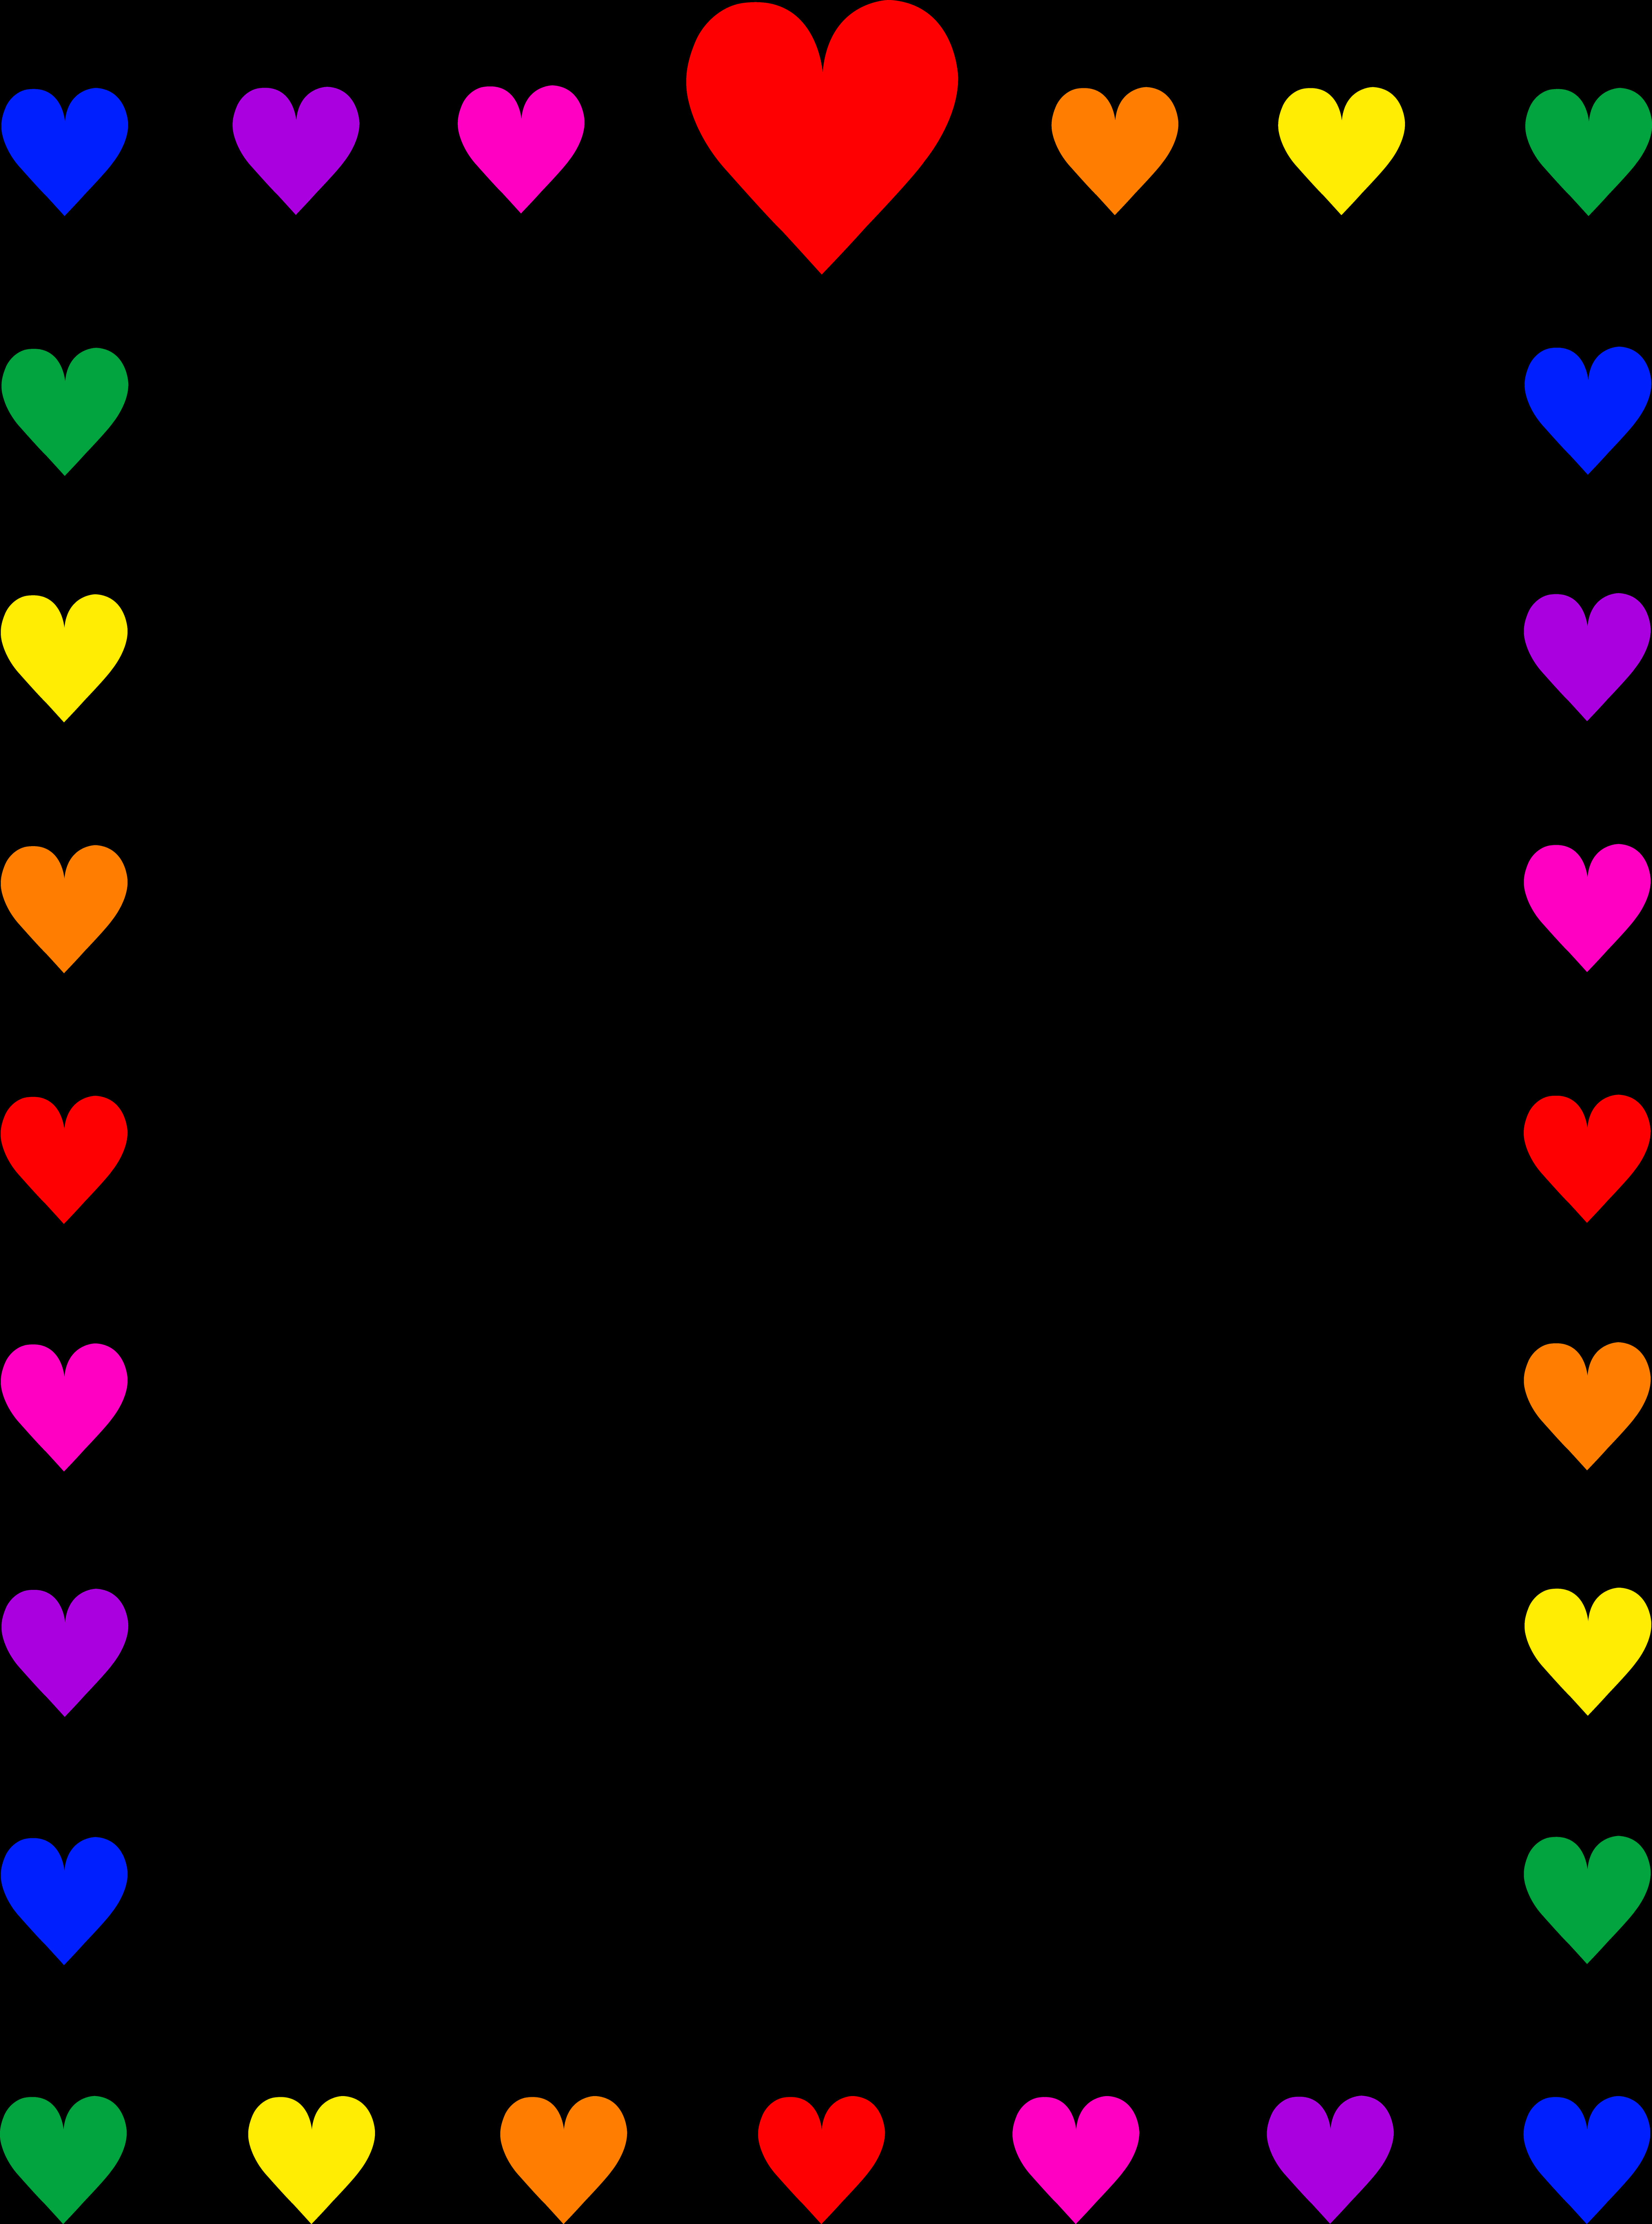 Colorful Hearts Border Design PNG image